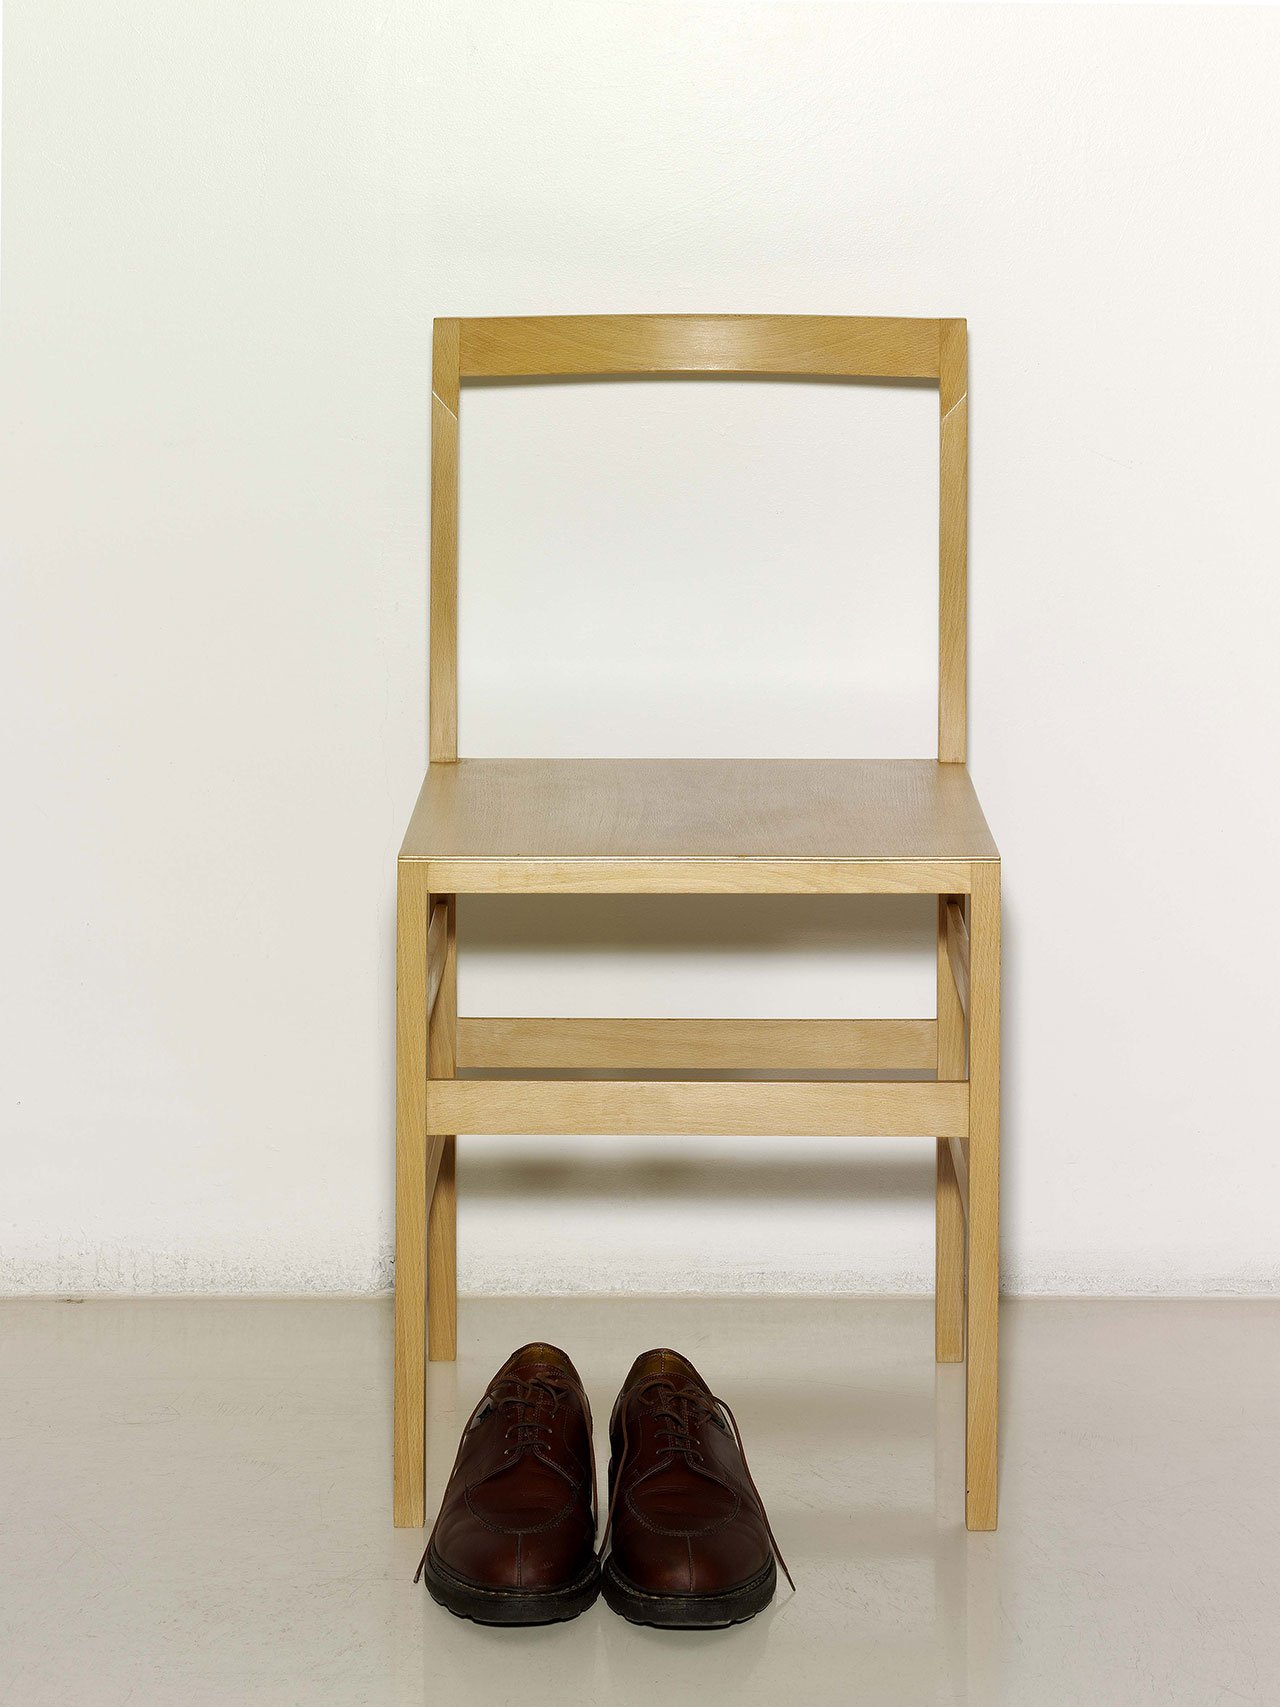 CM01 chair
Photo: Massproductions